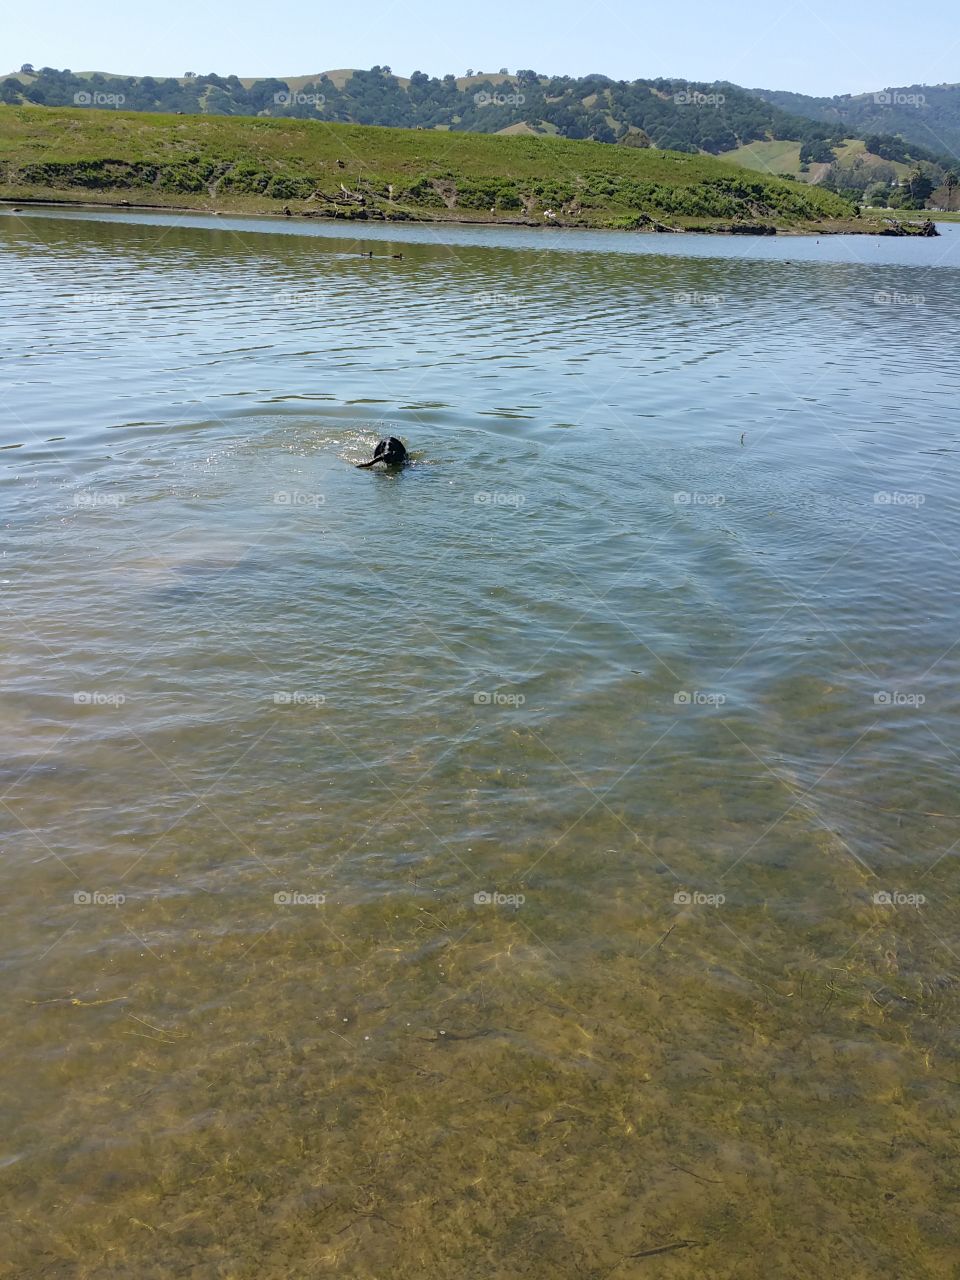 Dakota swims. my lab puppy Dakota swims at Pena Adobe lagoon after a stick bigger than she is